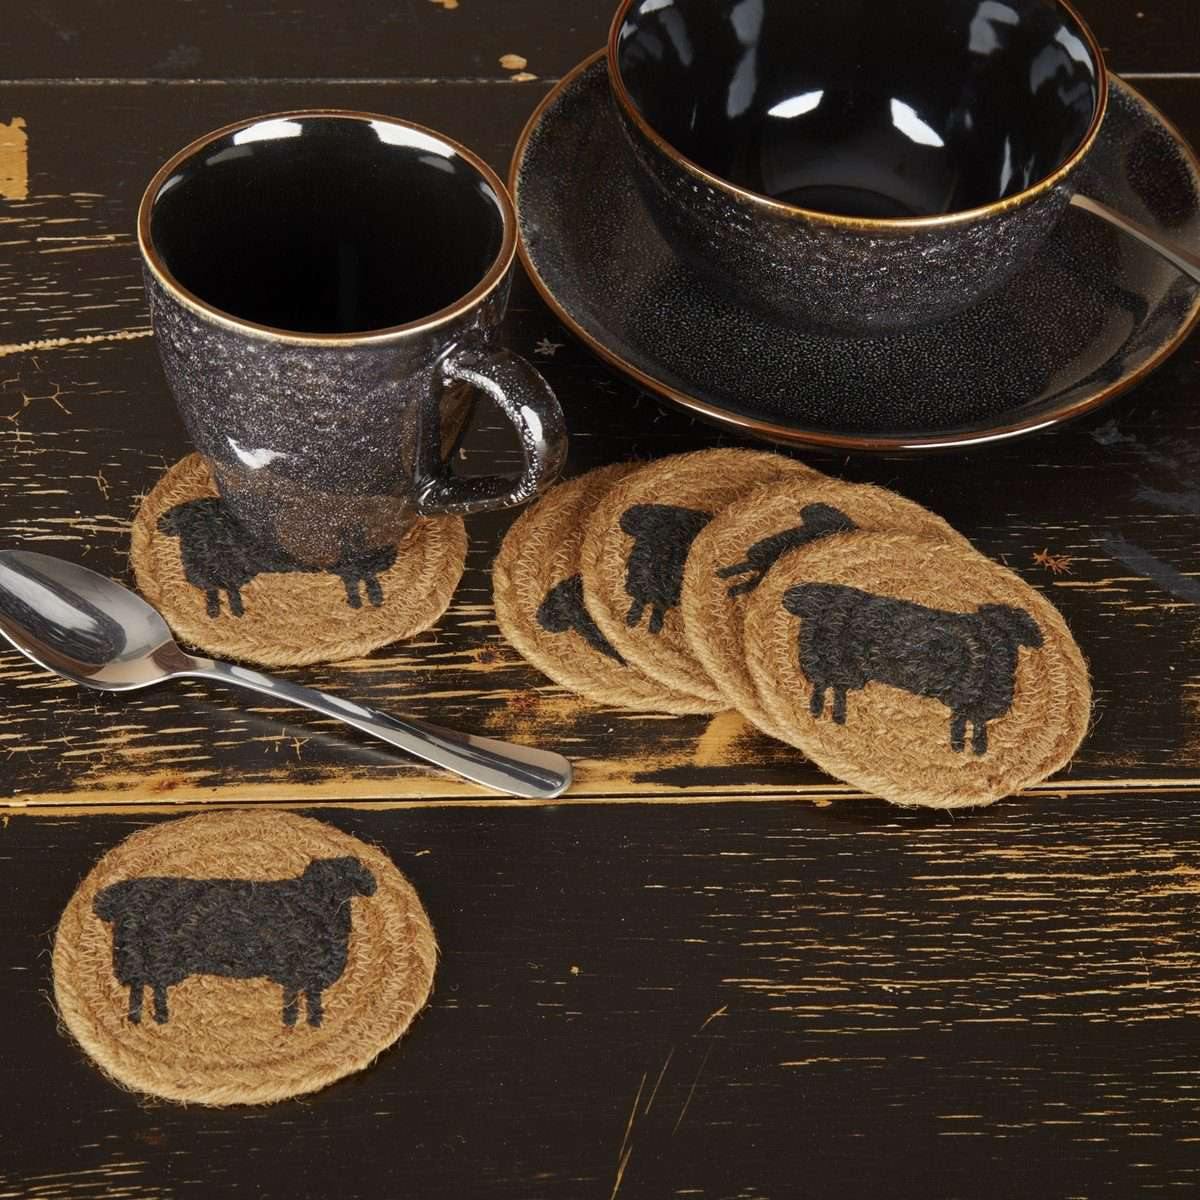 Heritage Farms Sheep Jute Coaster Set of 6 VHC Brands - The Fox Decor